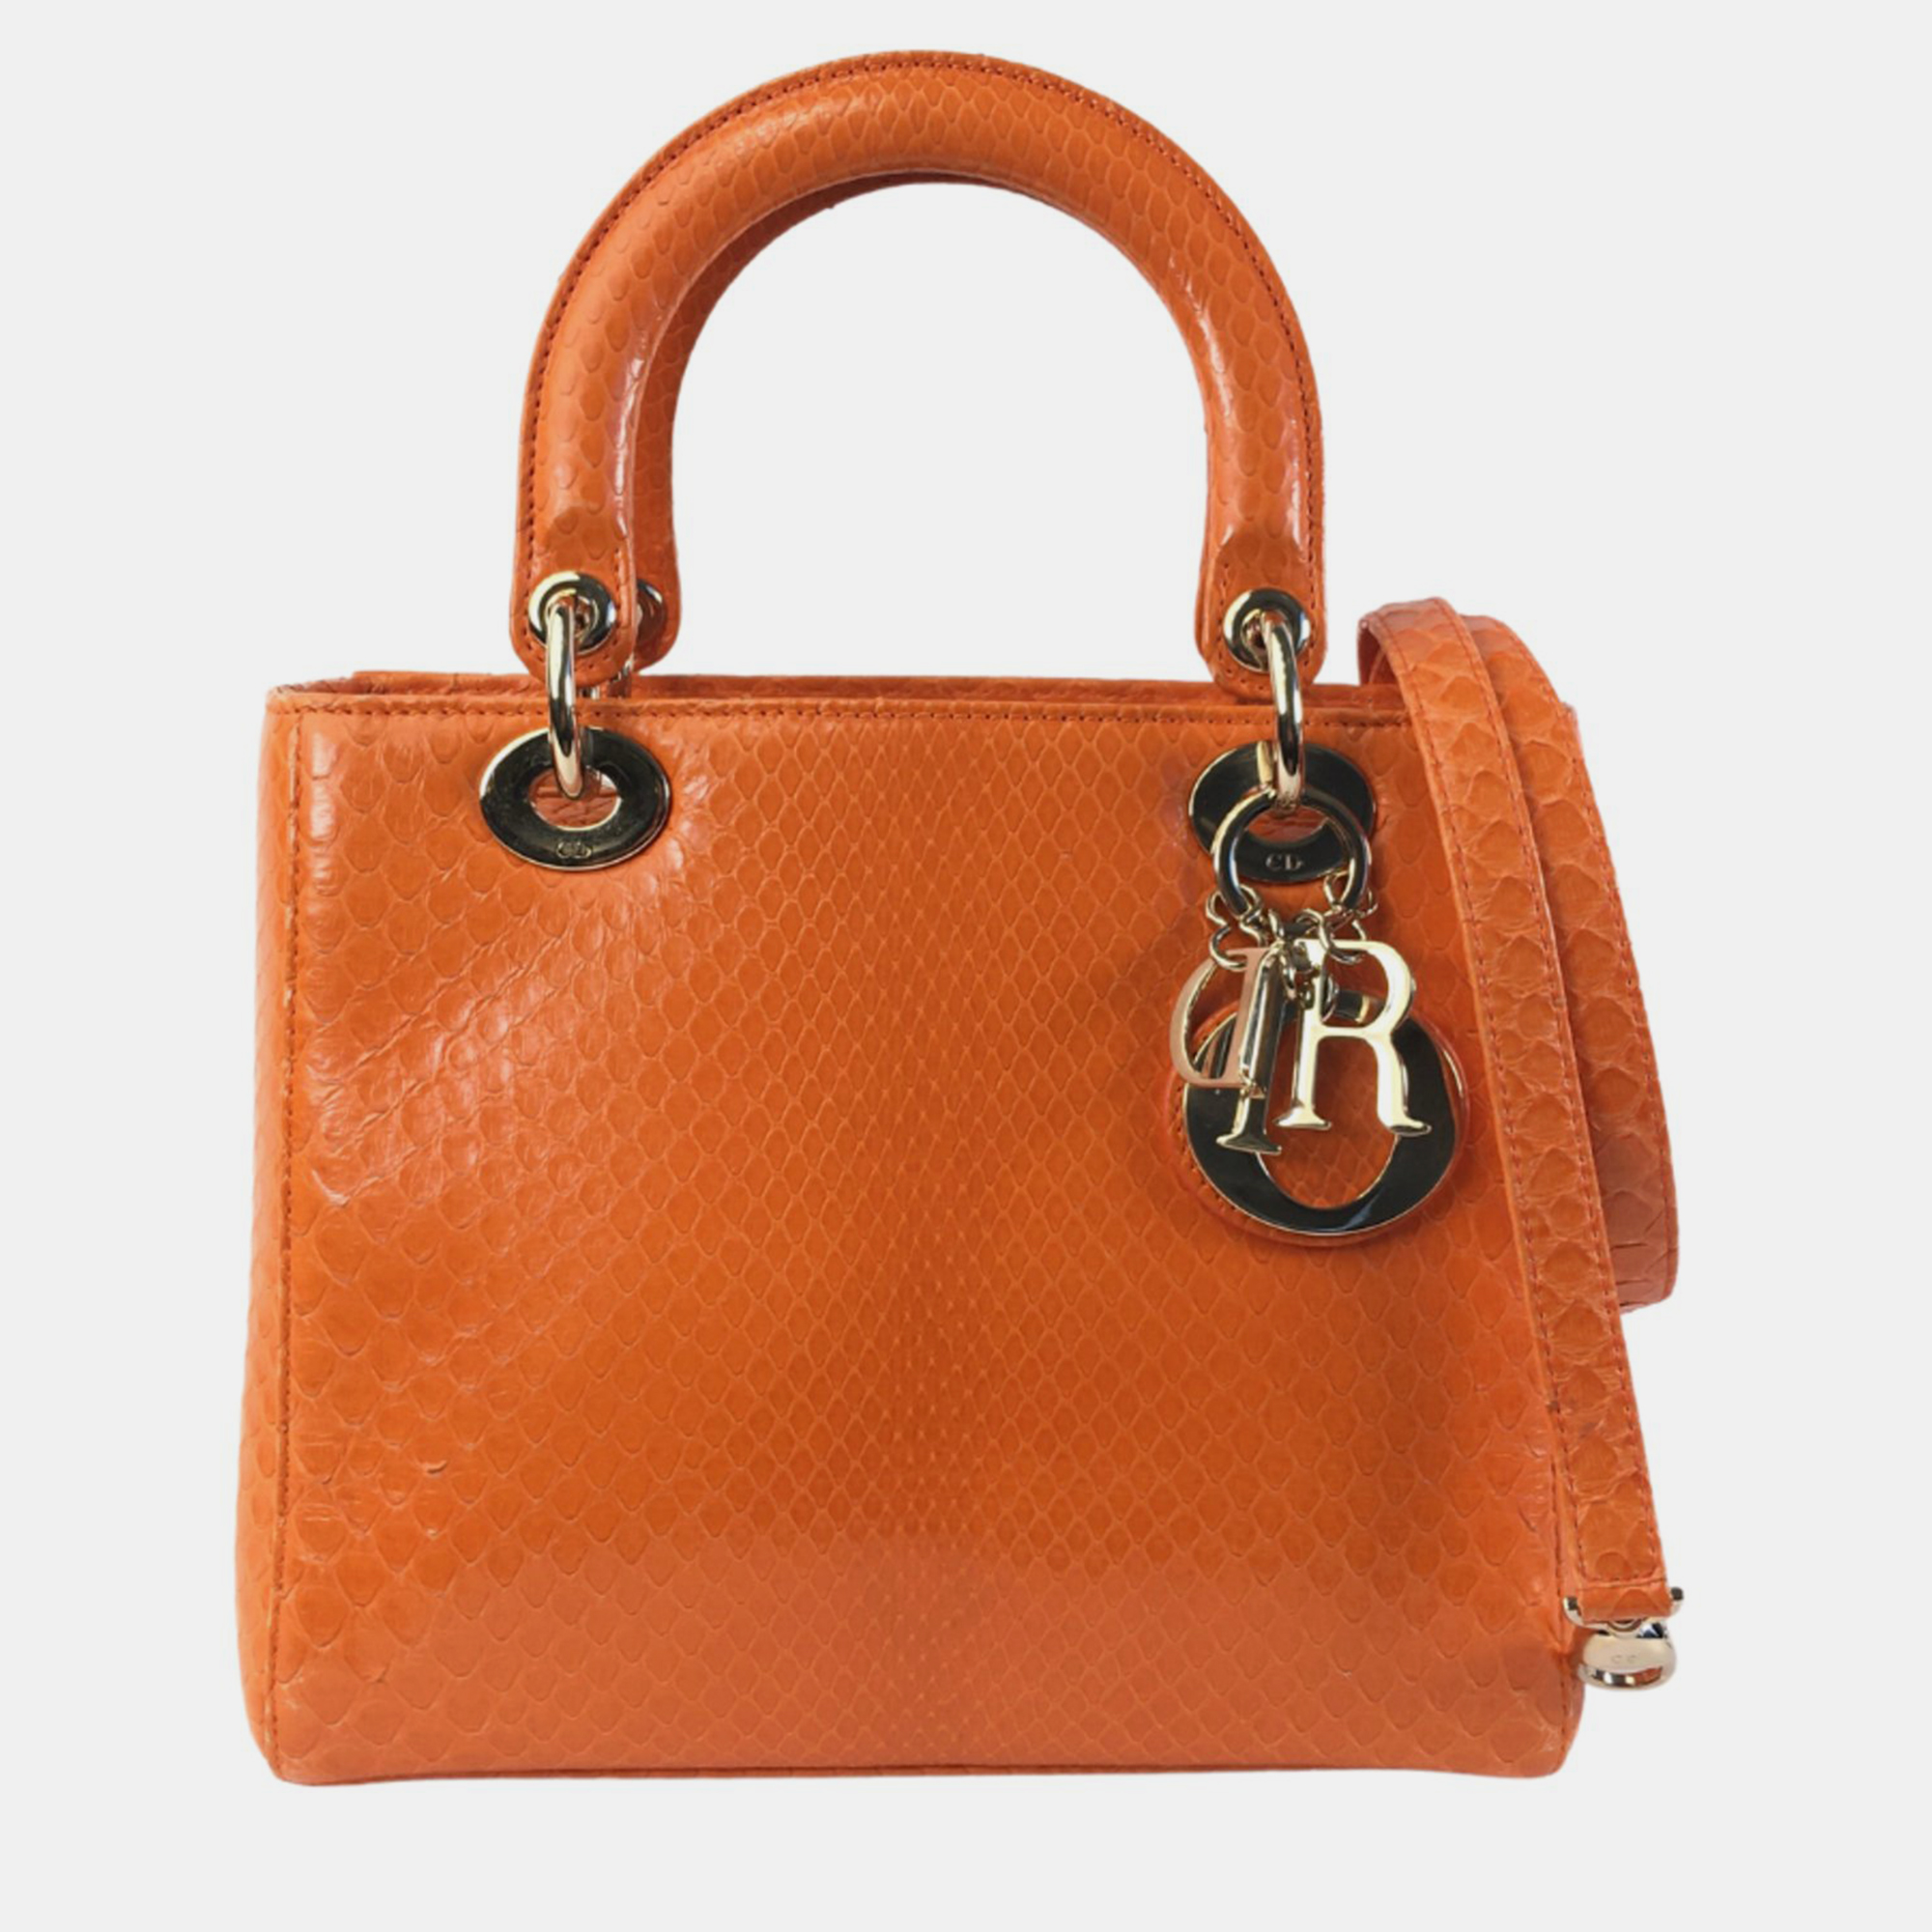 Dior orange python leather medium lady dior tote bag